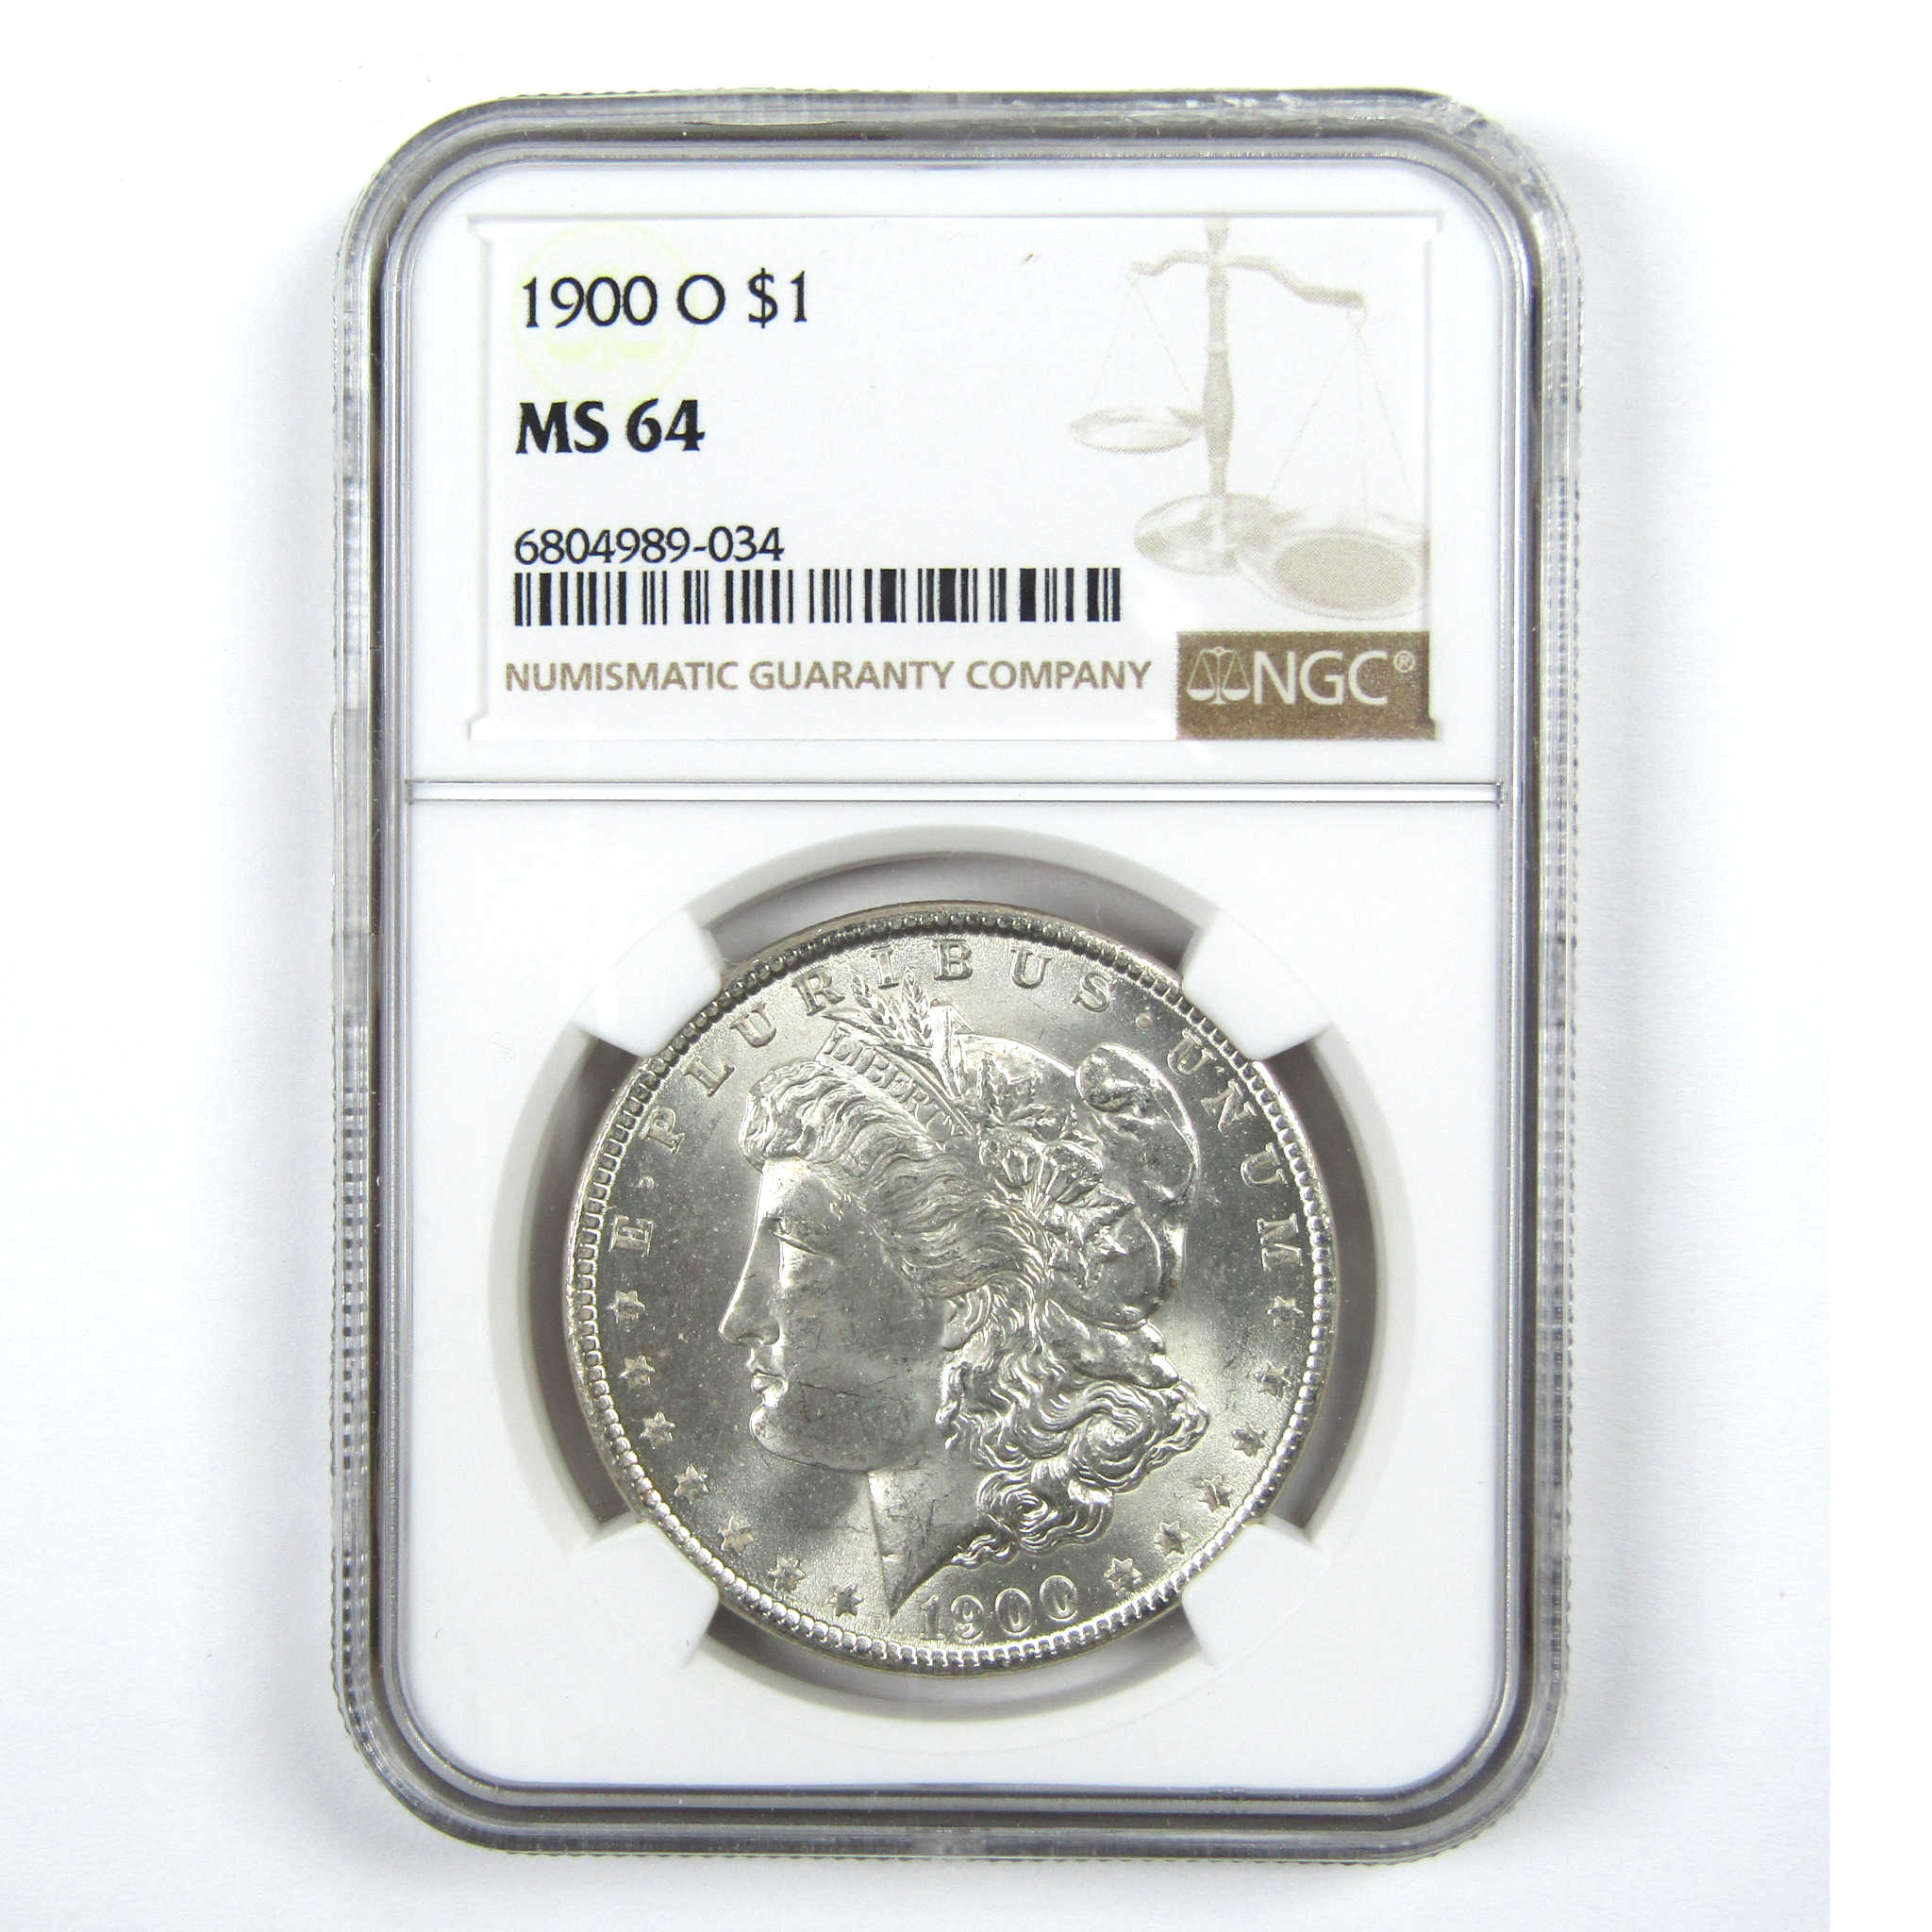 1900 O Morgan Dollar MS 64 NGC Silver $1 Uncirculated Coin SKU:I12817 - Morgan coin - Morgan silver dollar - Morgan silver dollar for sale - Profile Coins &amp; Collectibles